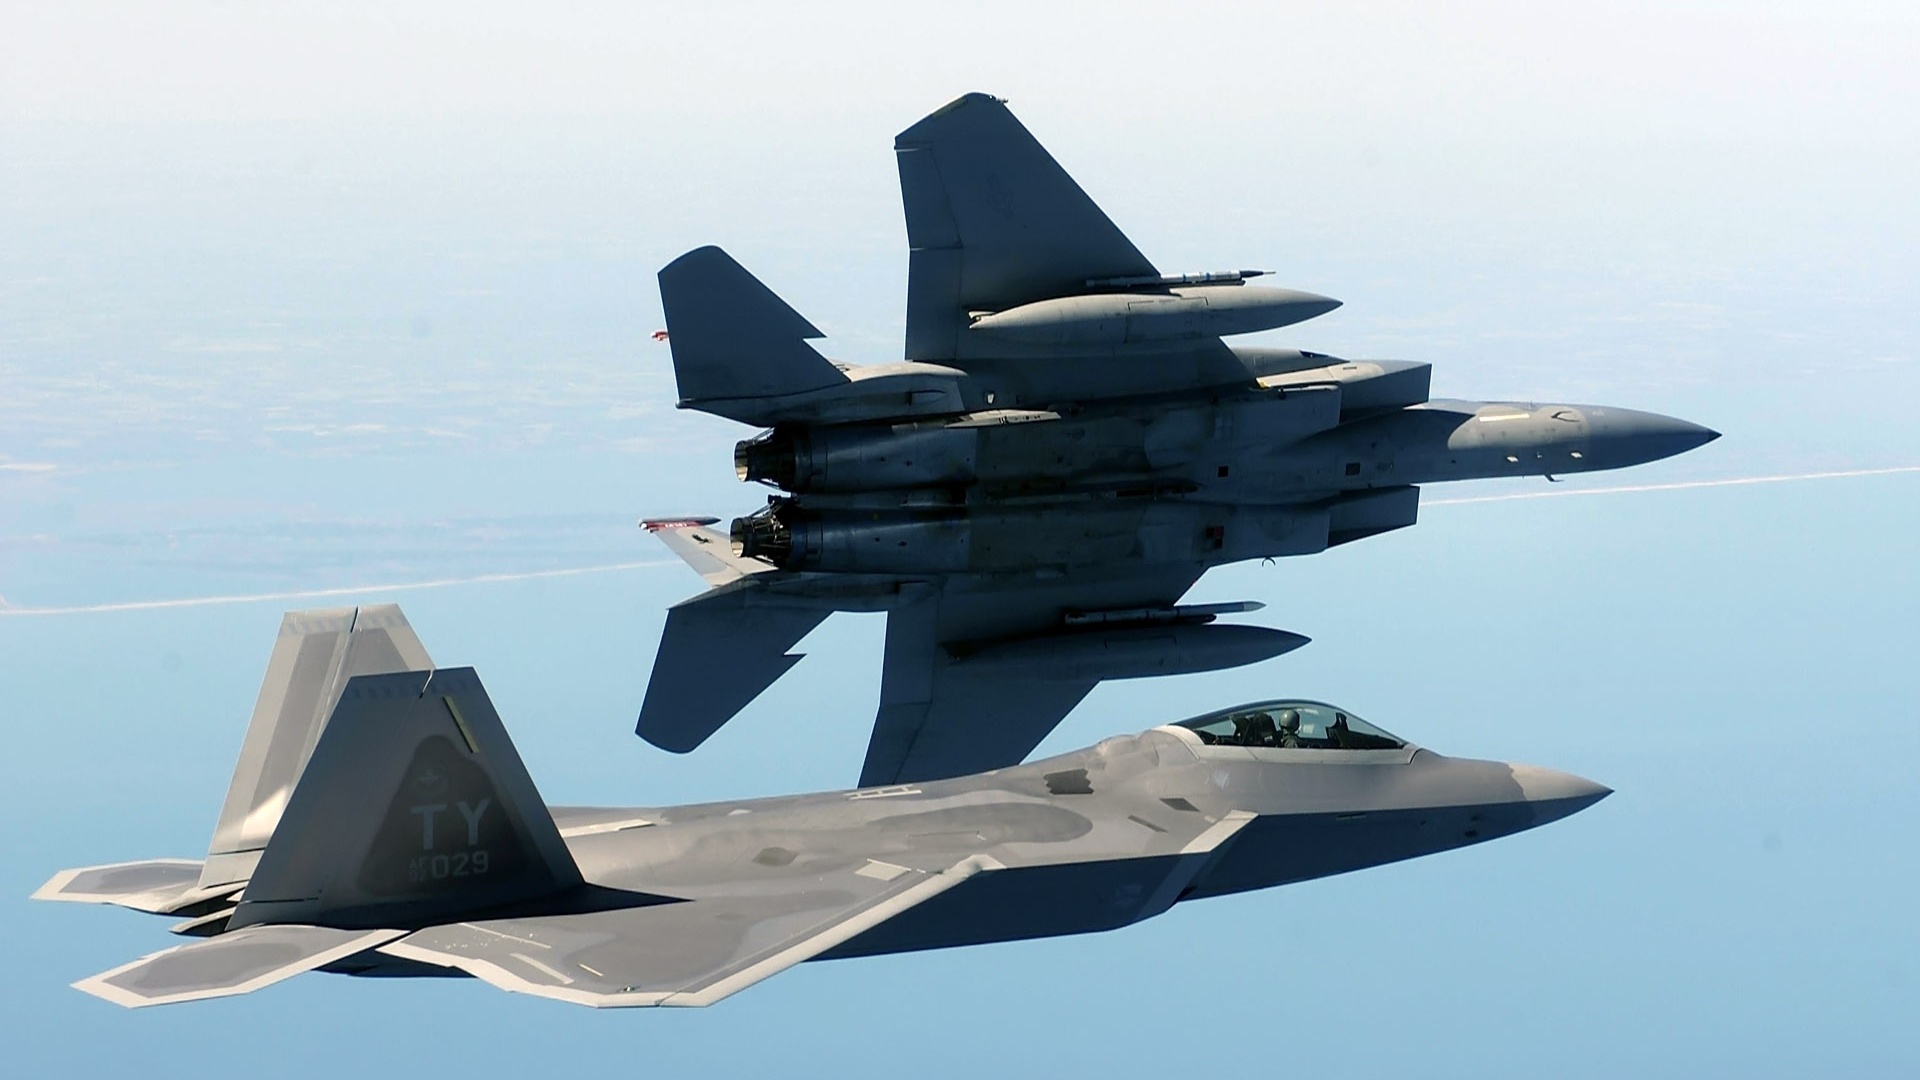 Military F22 Raptor Planes F15 Eagle